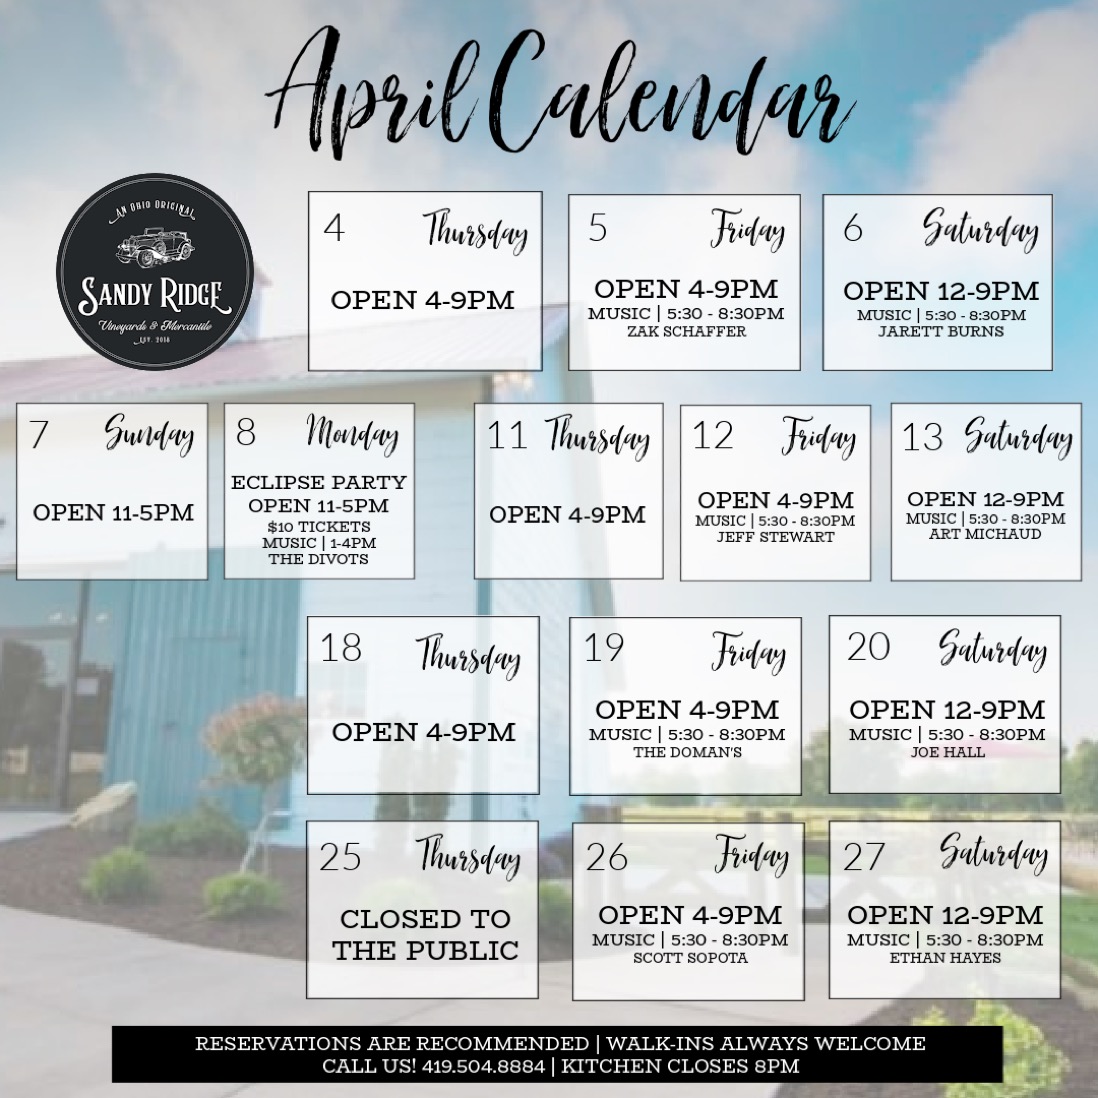 Sandy Ridge Vineyard Calendar of Events